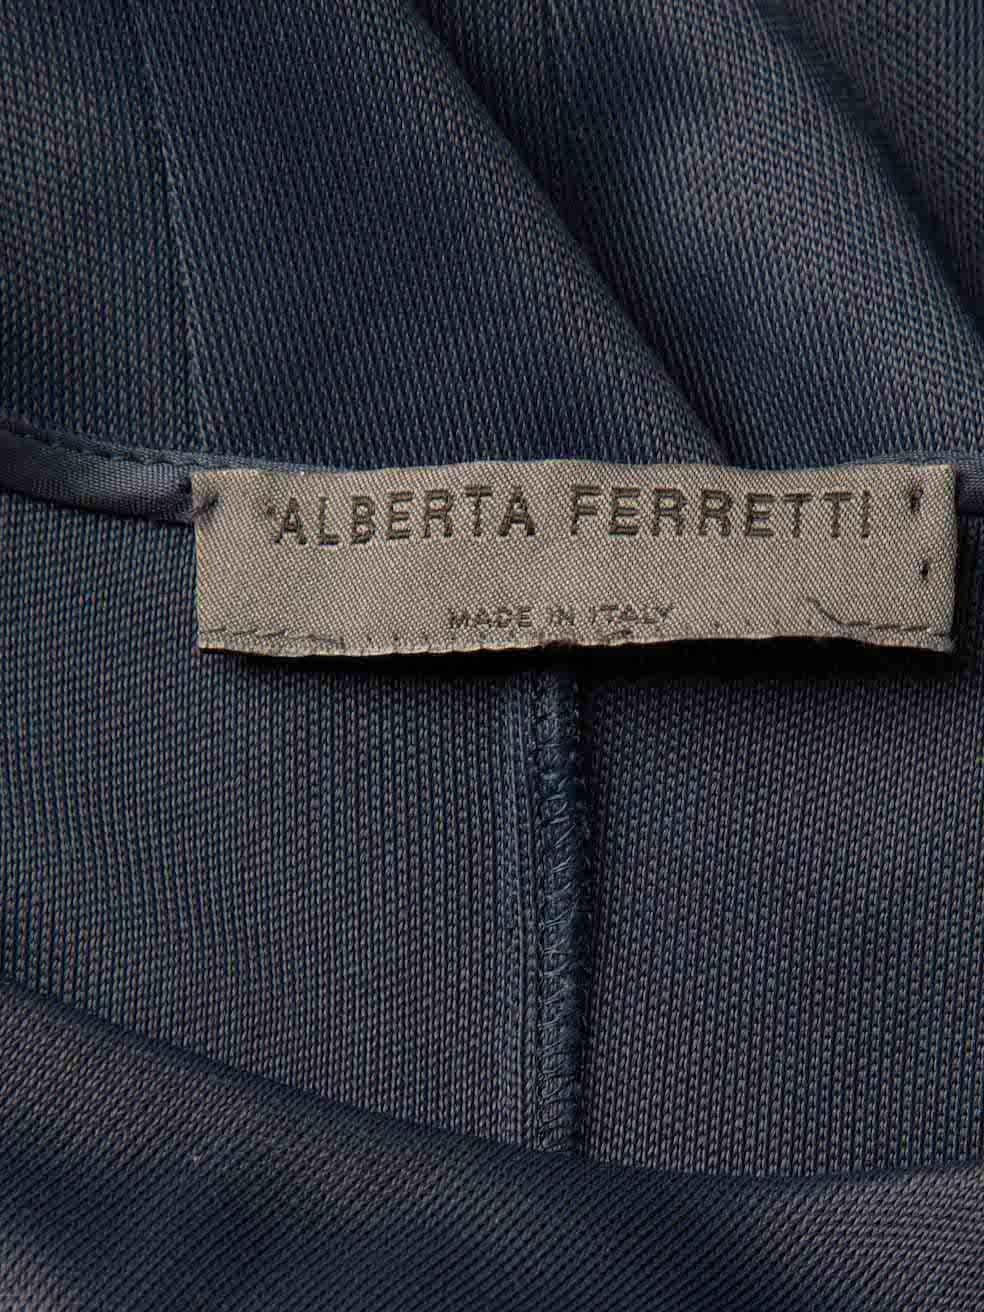 Women's Alberta Ferretti Navy Knee Length Dress Size XS For Sale